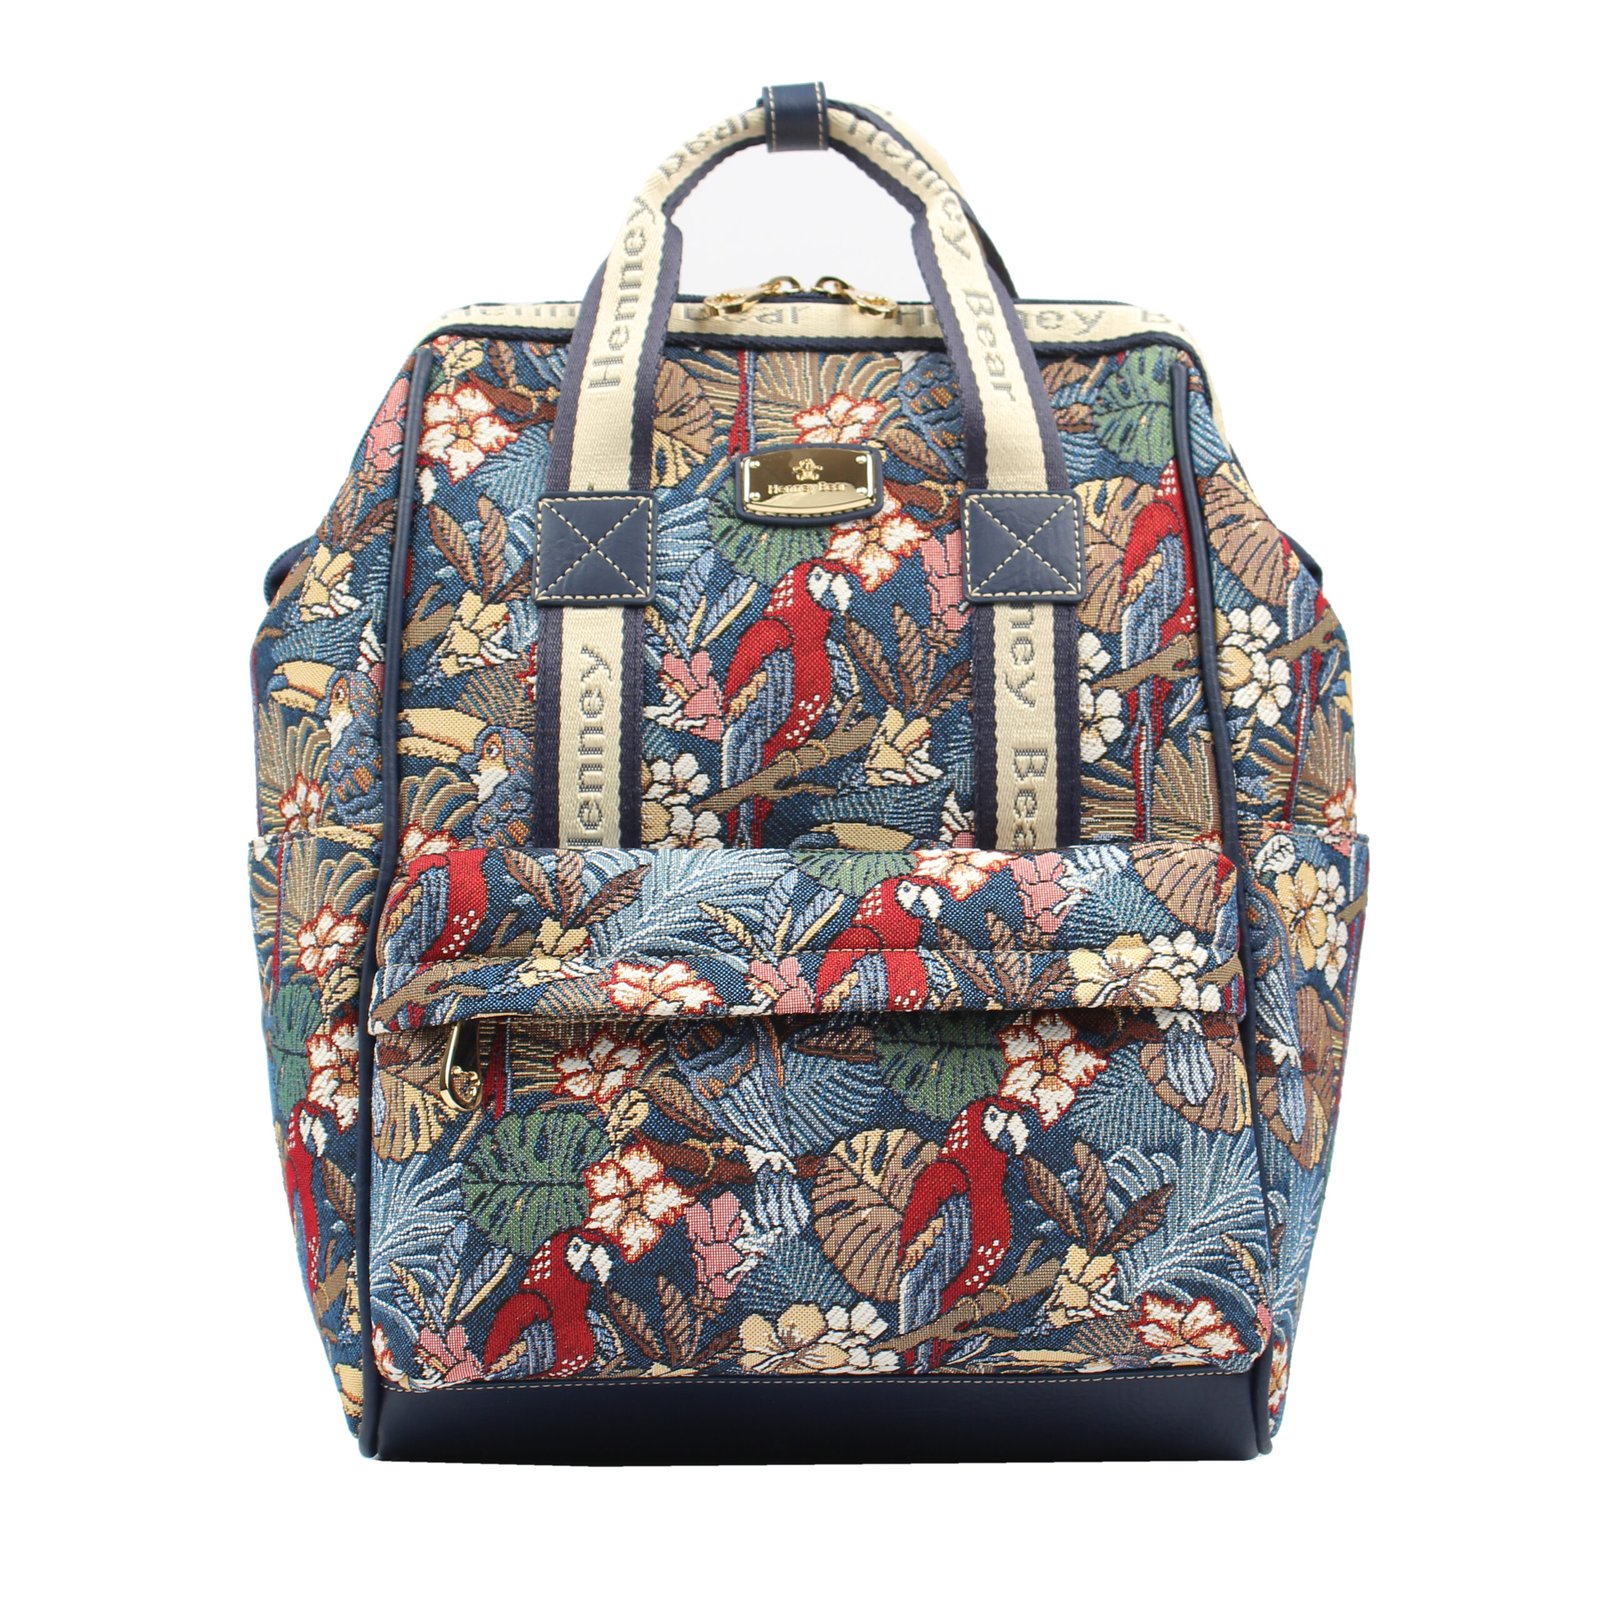 Henney Bear backpack parrot song laptop bag